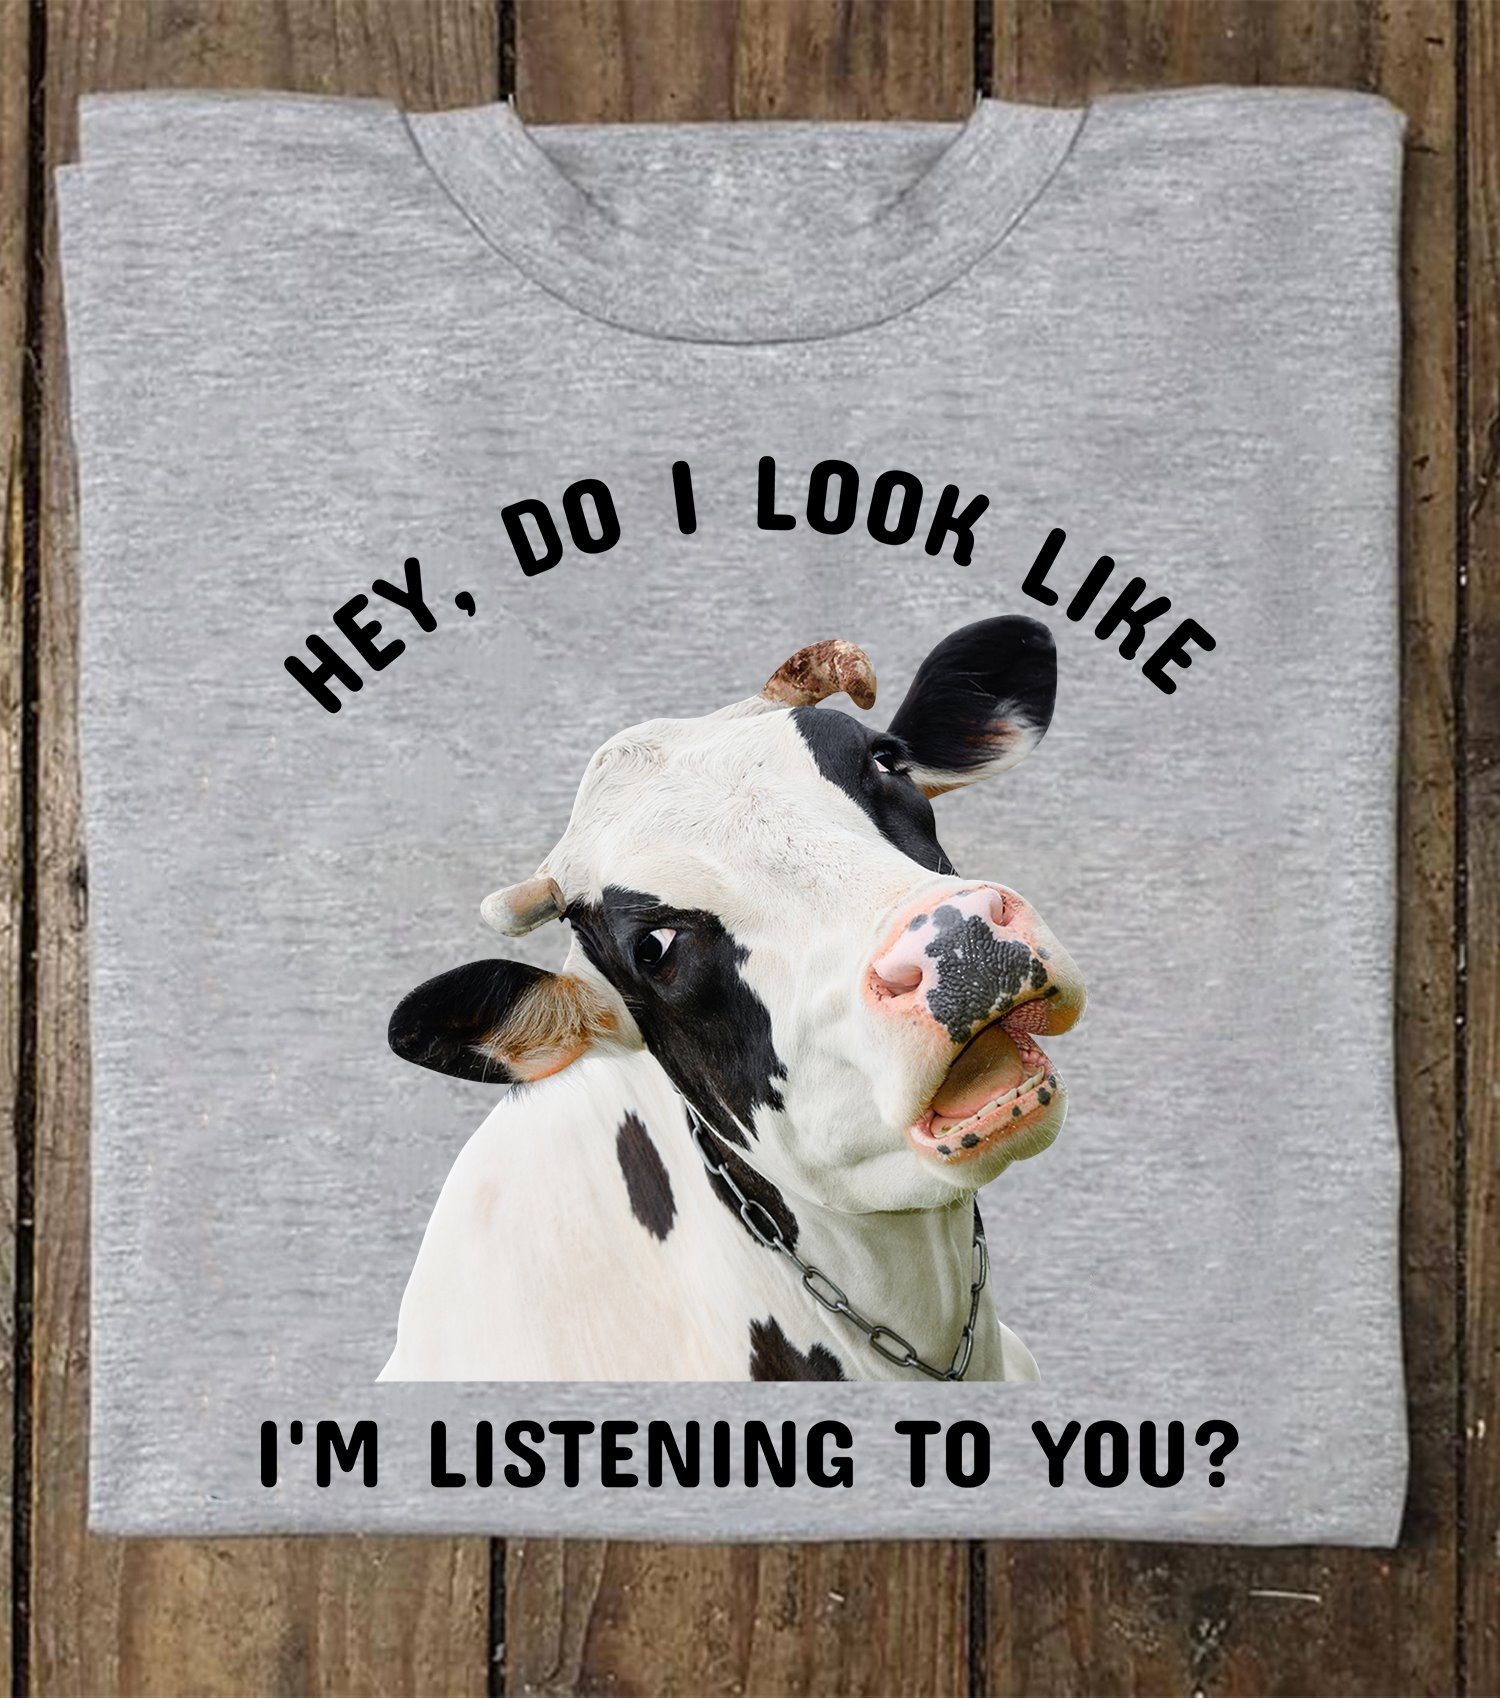 Hey, do I look like I'm listening to you - Cow milk